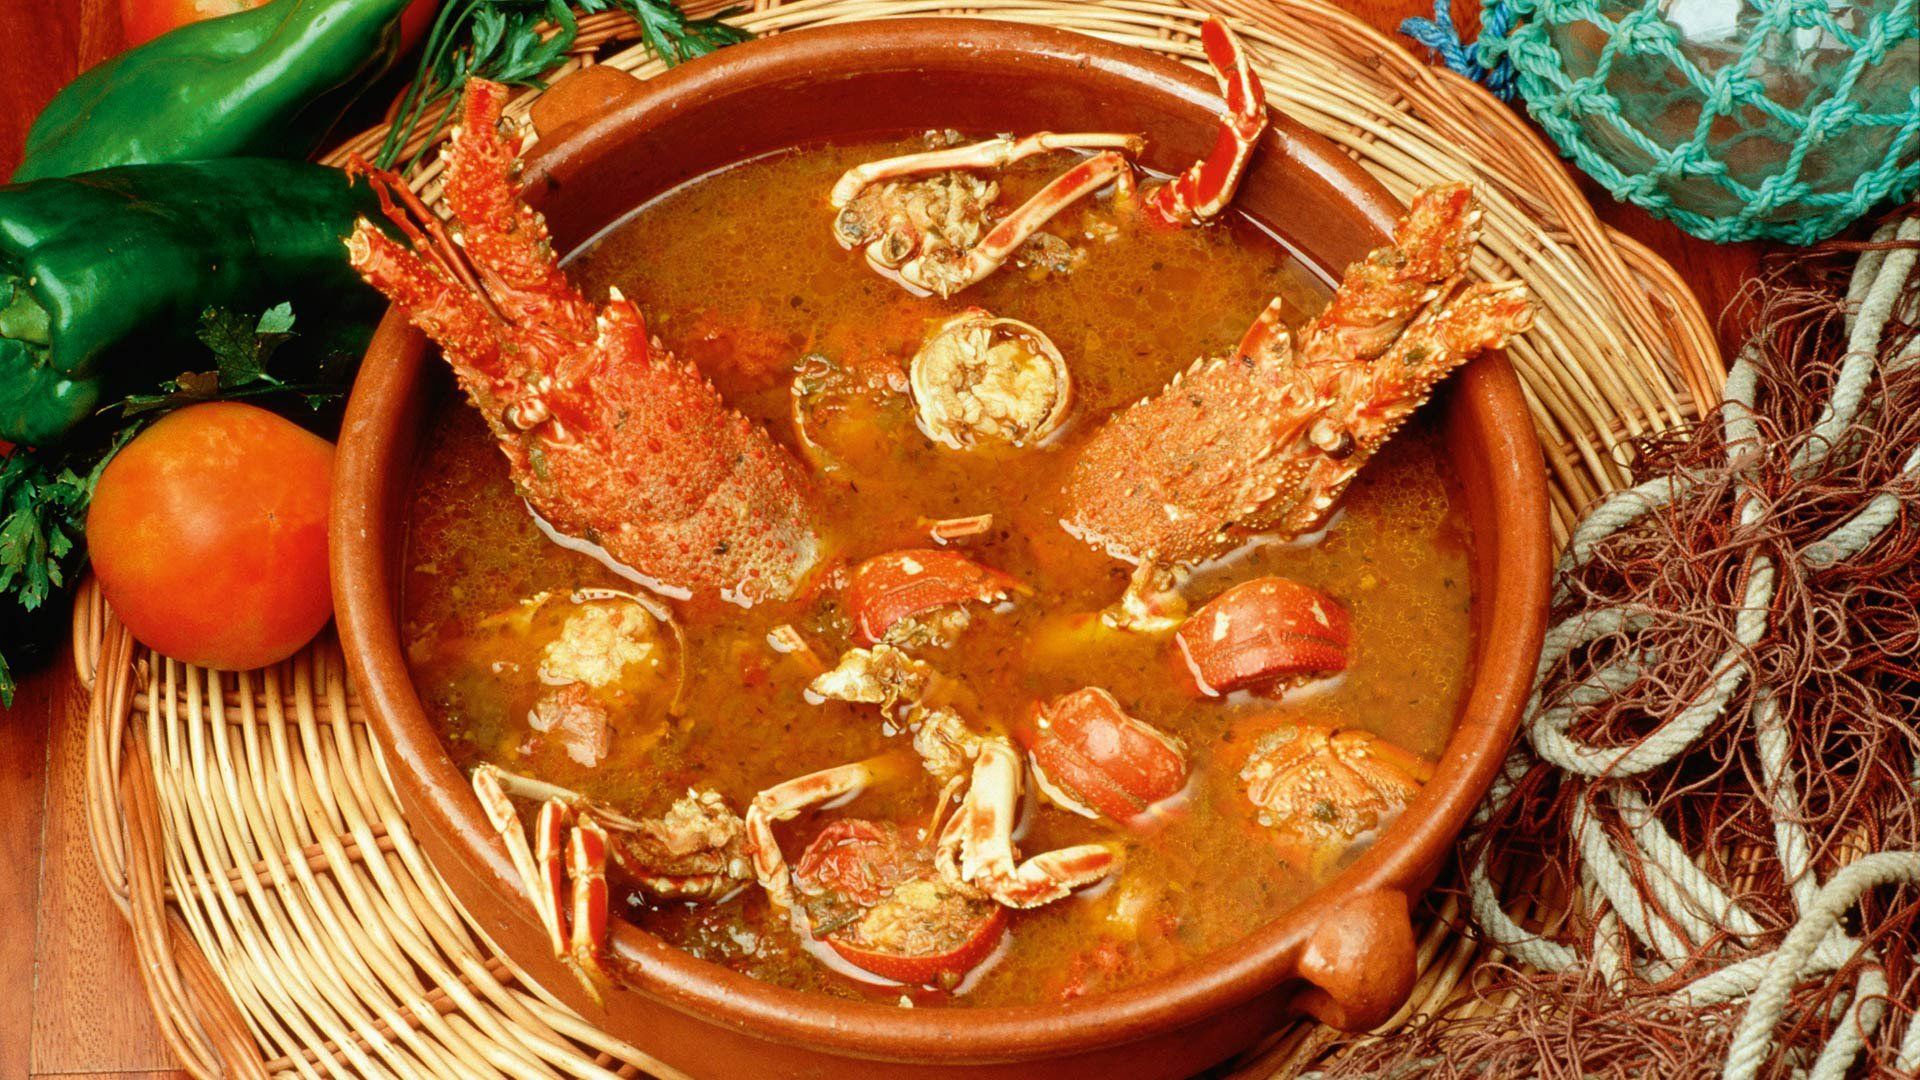 Menorcan Caldereta de langosta or lobster stew